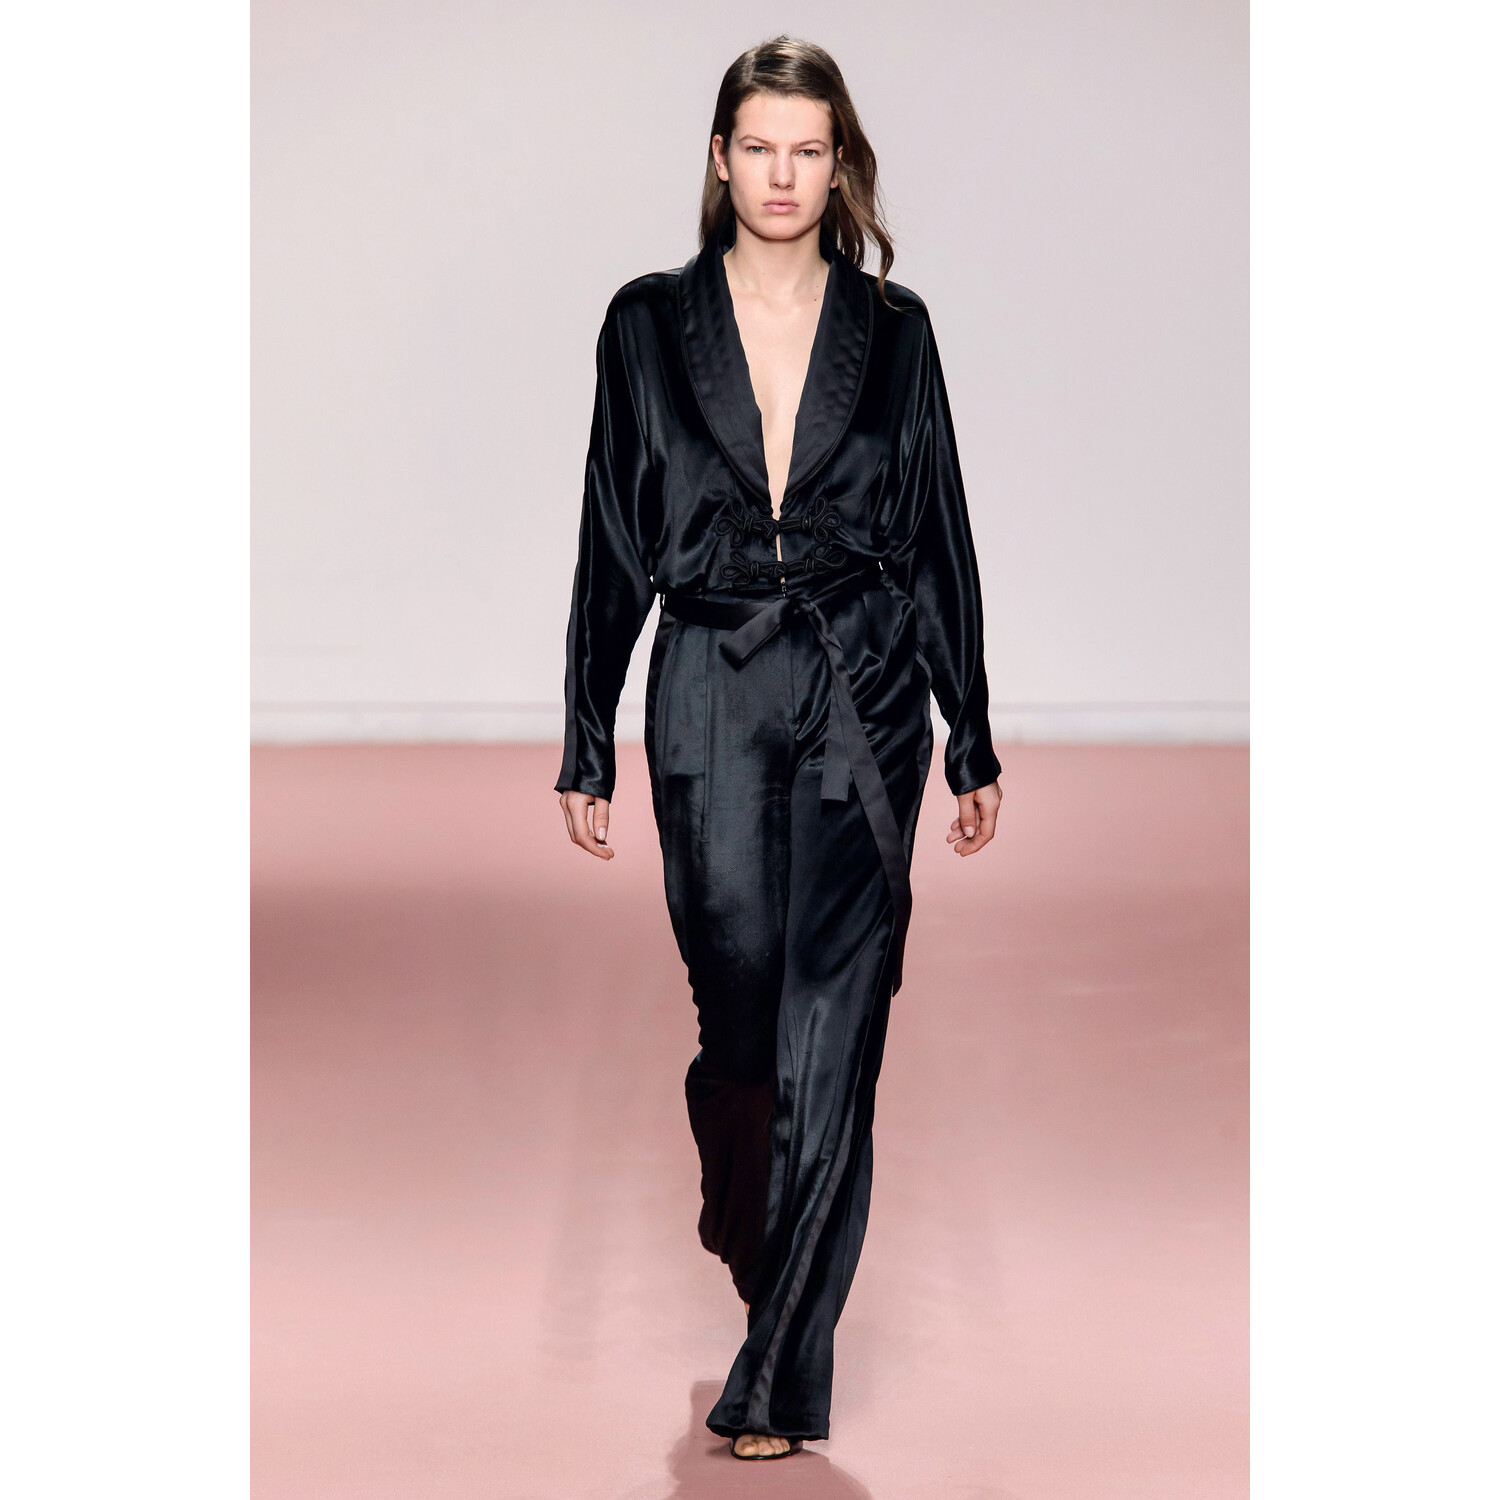 Фото Blumarine Fall 2019 Ready-to-Wear / Blumarine осень 2019 / Неделя моды: Милан